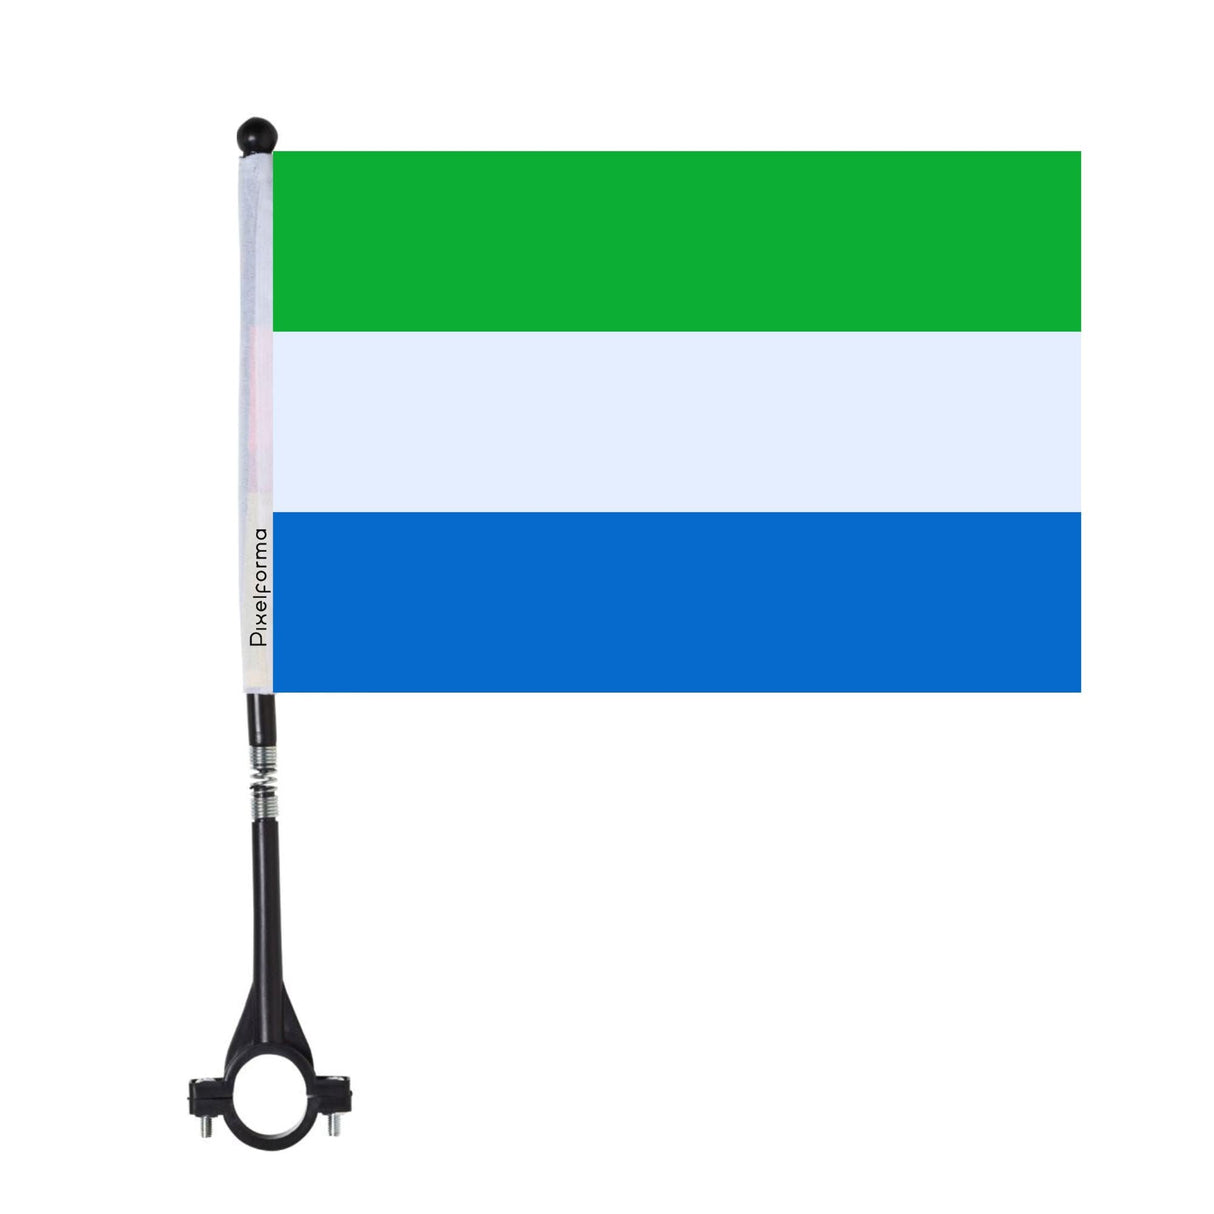 Sierra Leone Polyester Bike Flag - Pixelforma